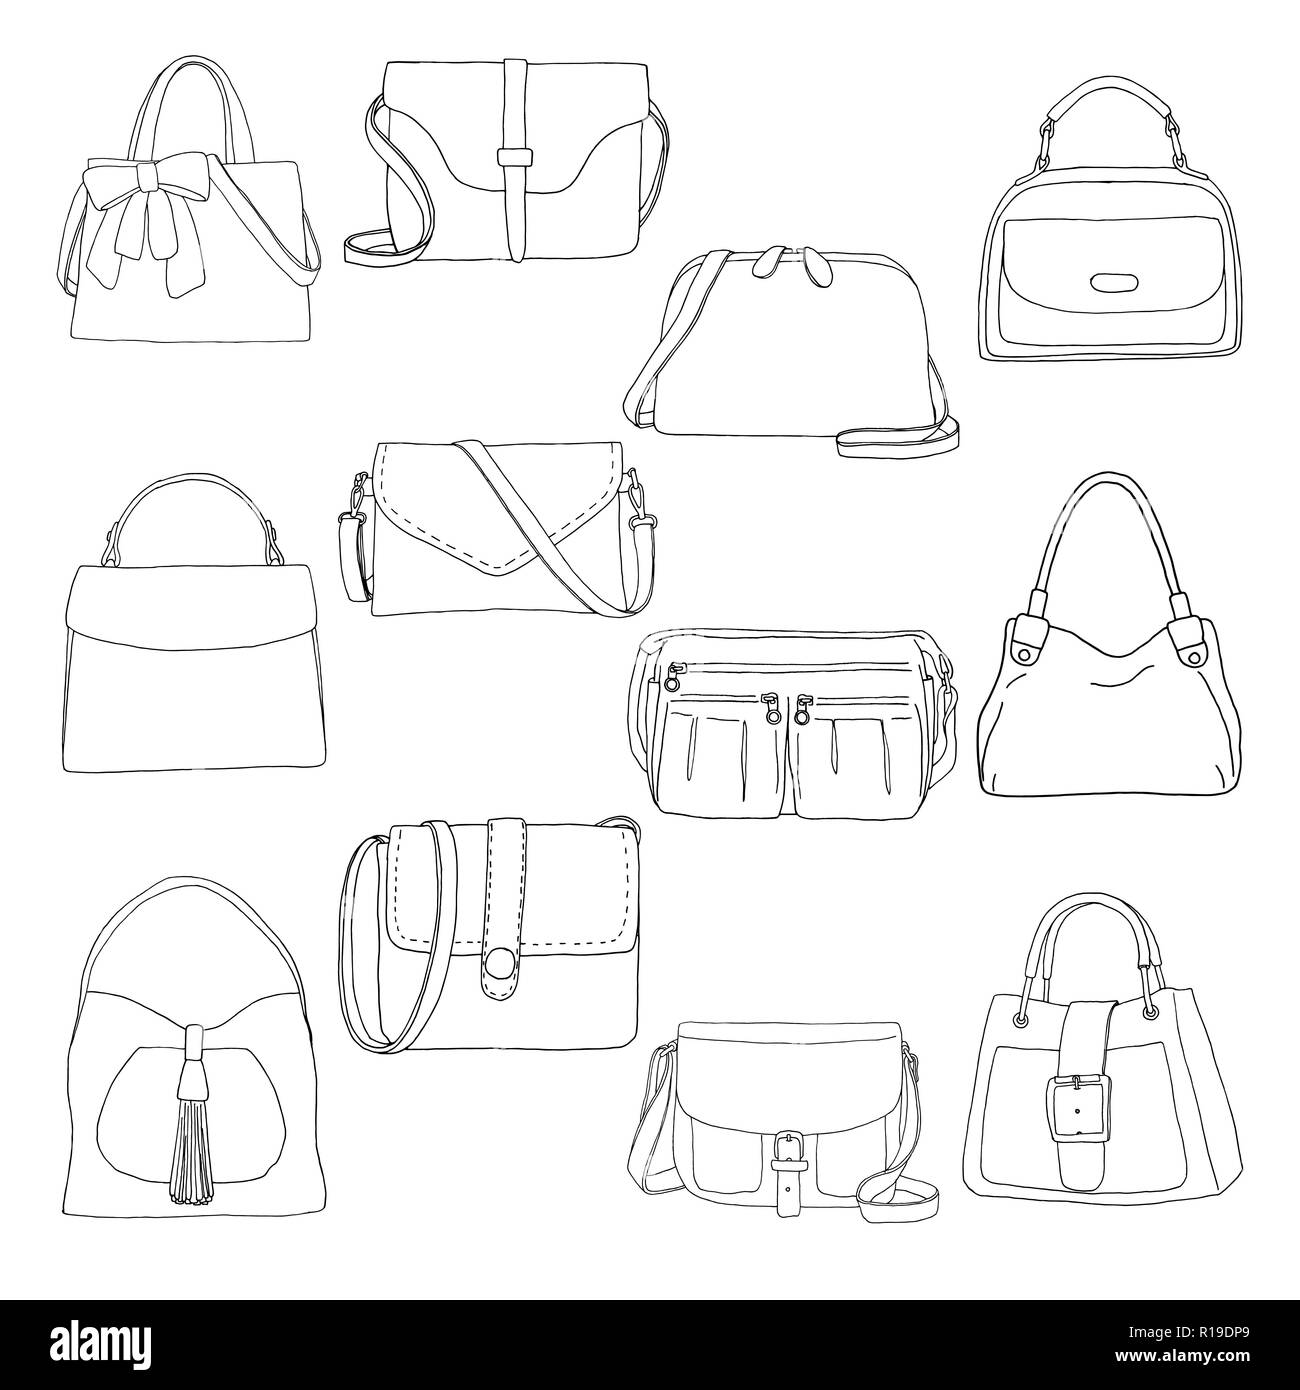 12,819 Handbag Sketch Images, Stock Photos & Vectors | Shutterstock